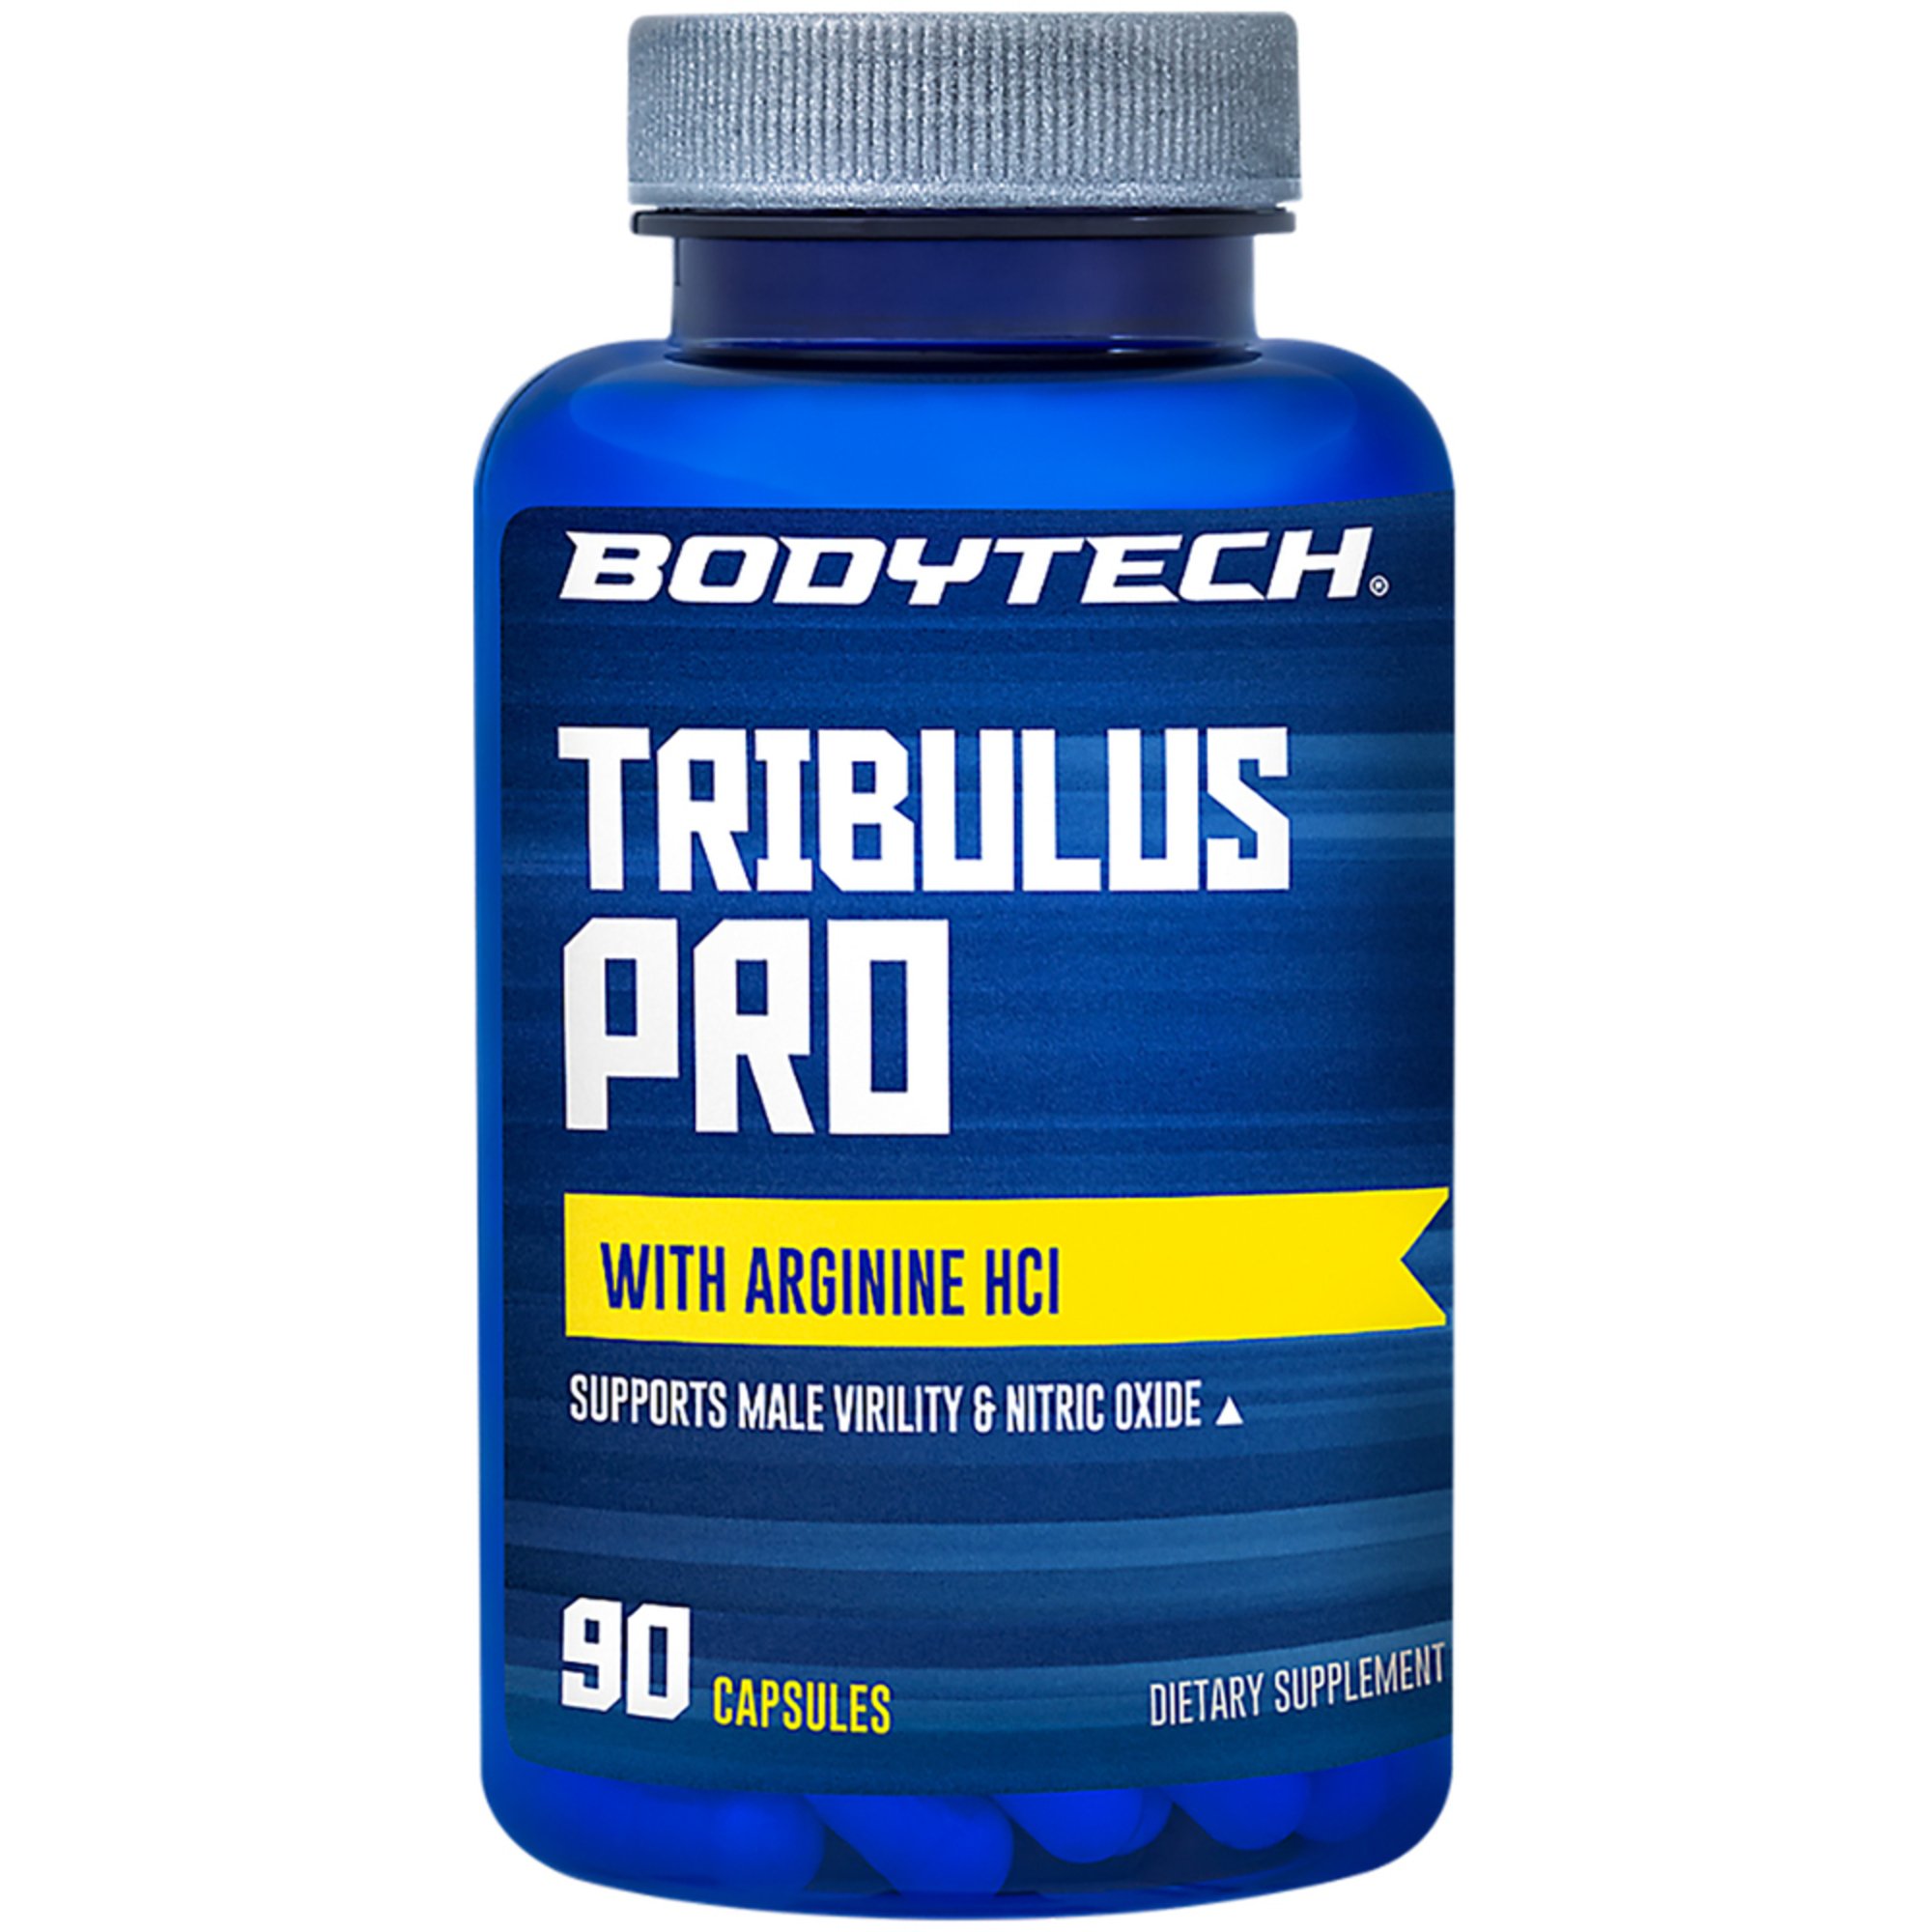 Bodytech Tribulus Pro With Arginine Hci 90 Capsules | Men's Health ...